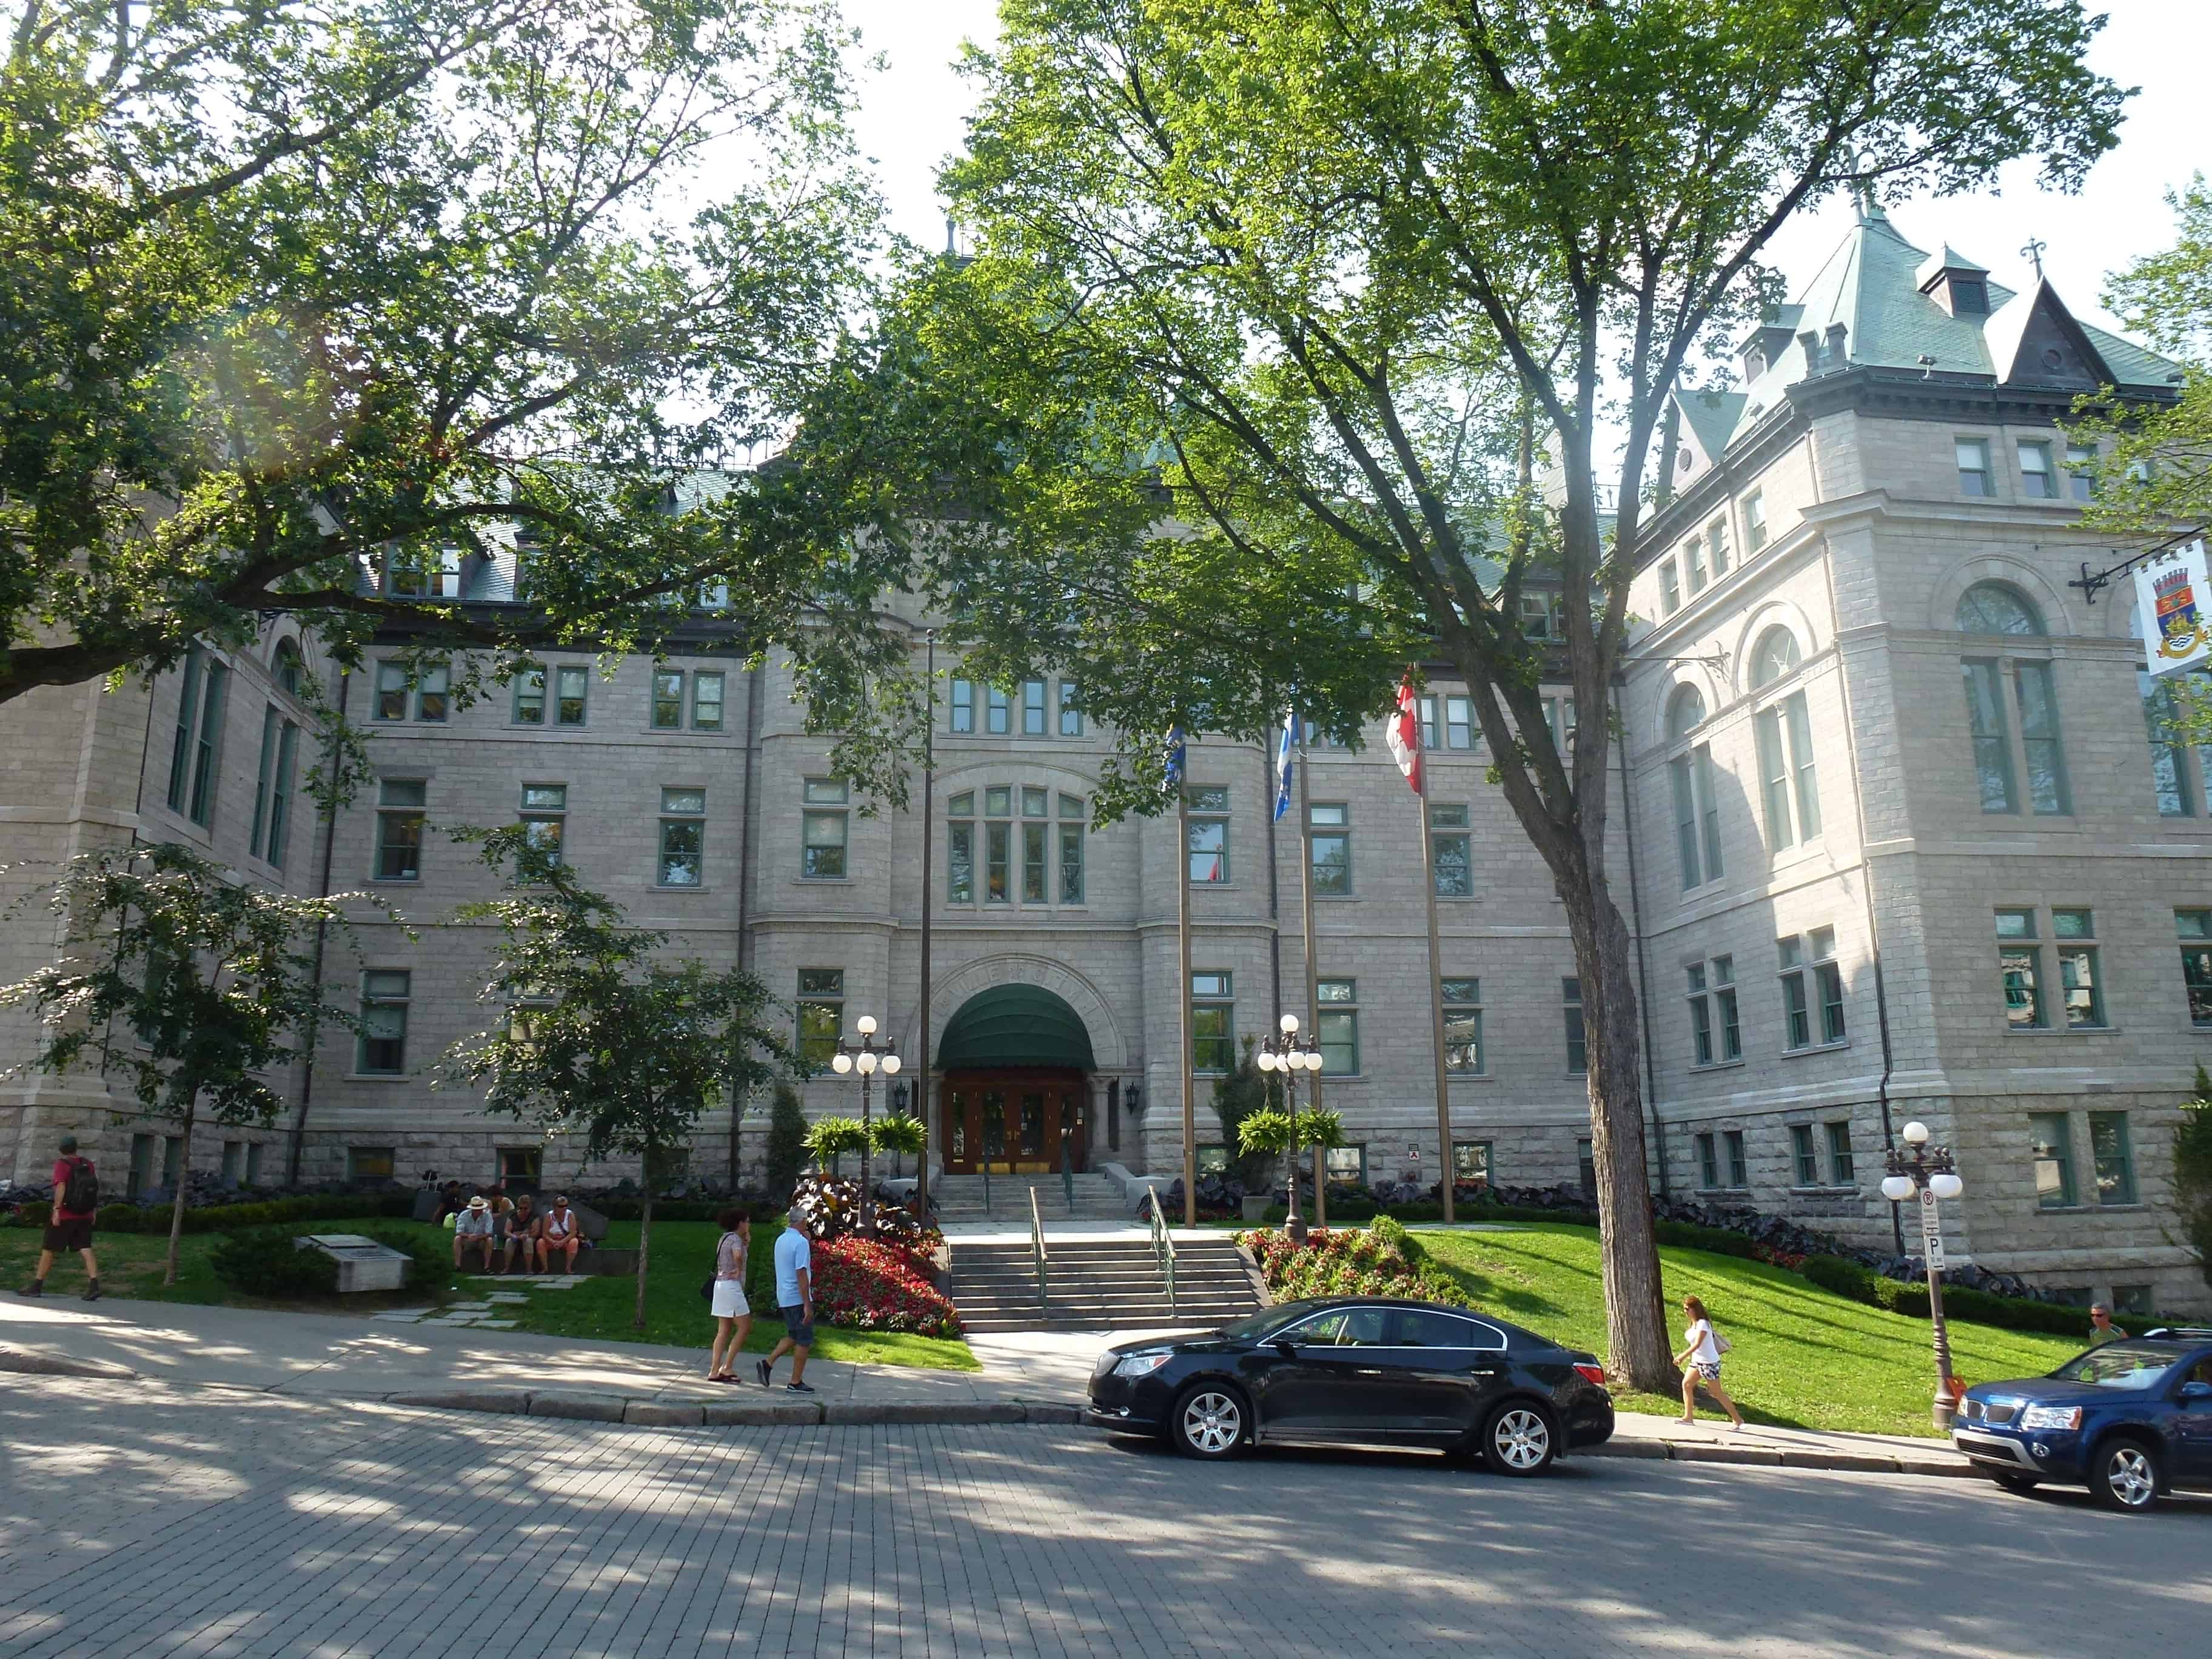 Hôtel de ville de Québec in Québec, Canada